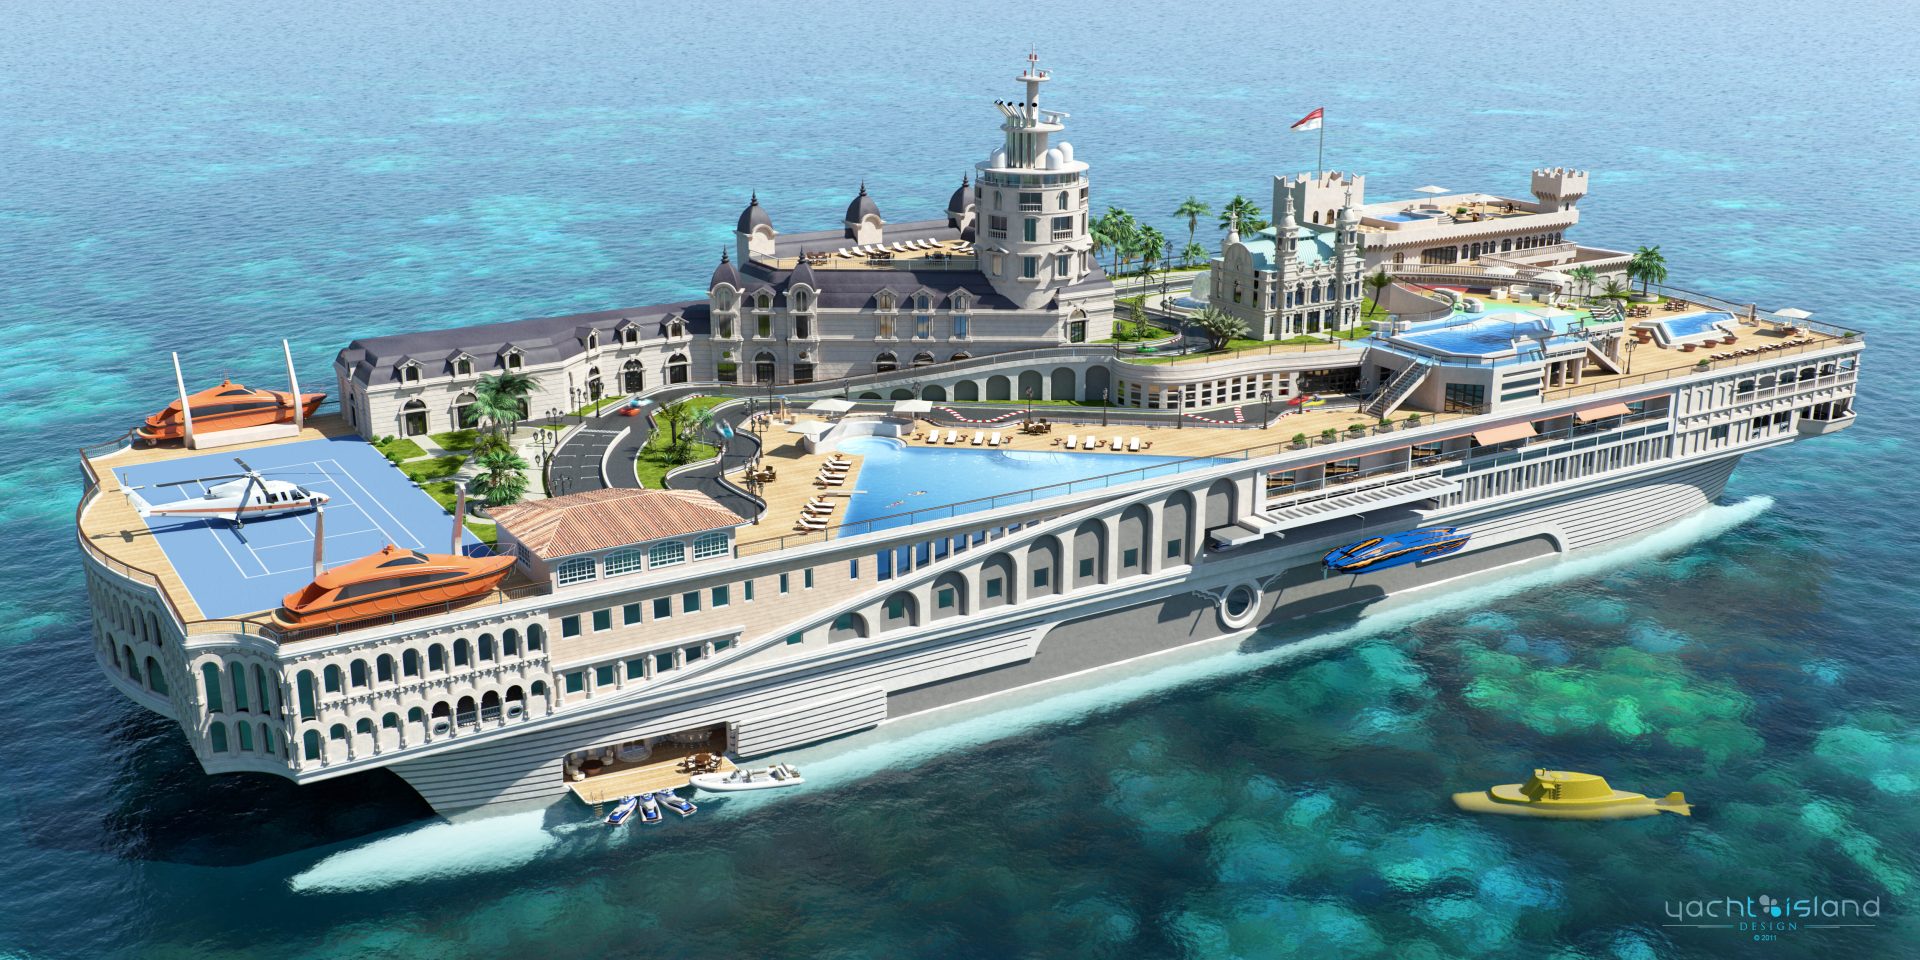 Streets of Monaco: Yacht Island Design